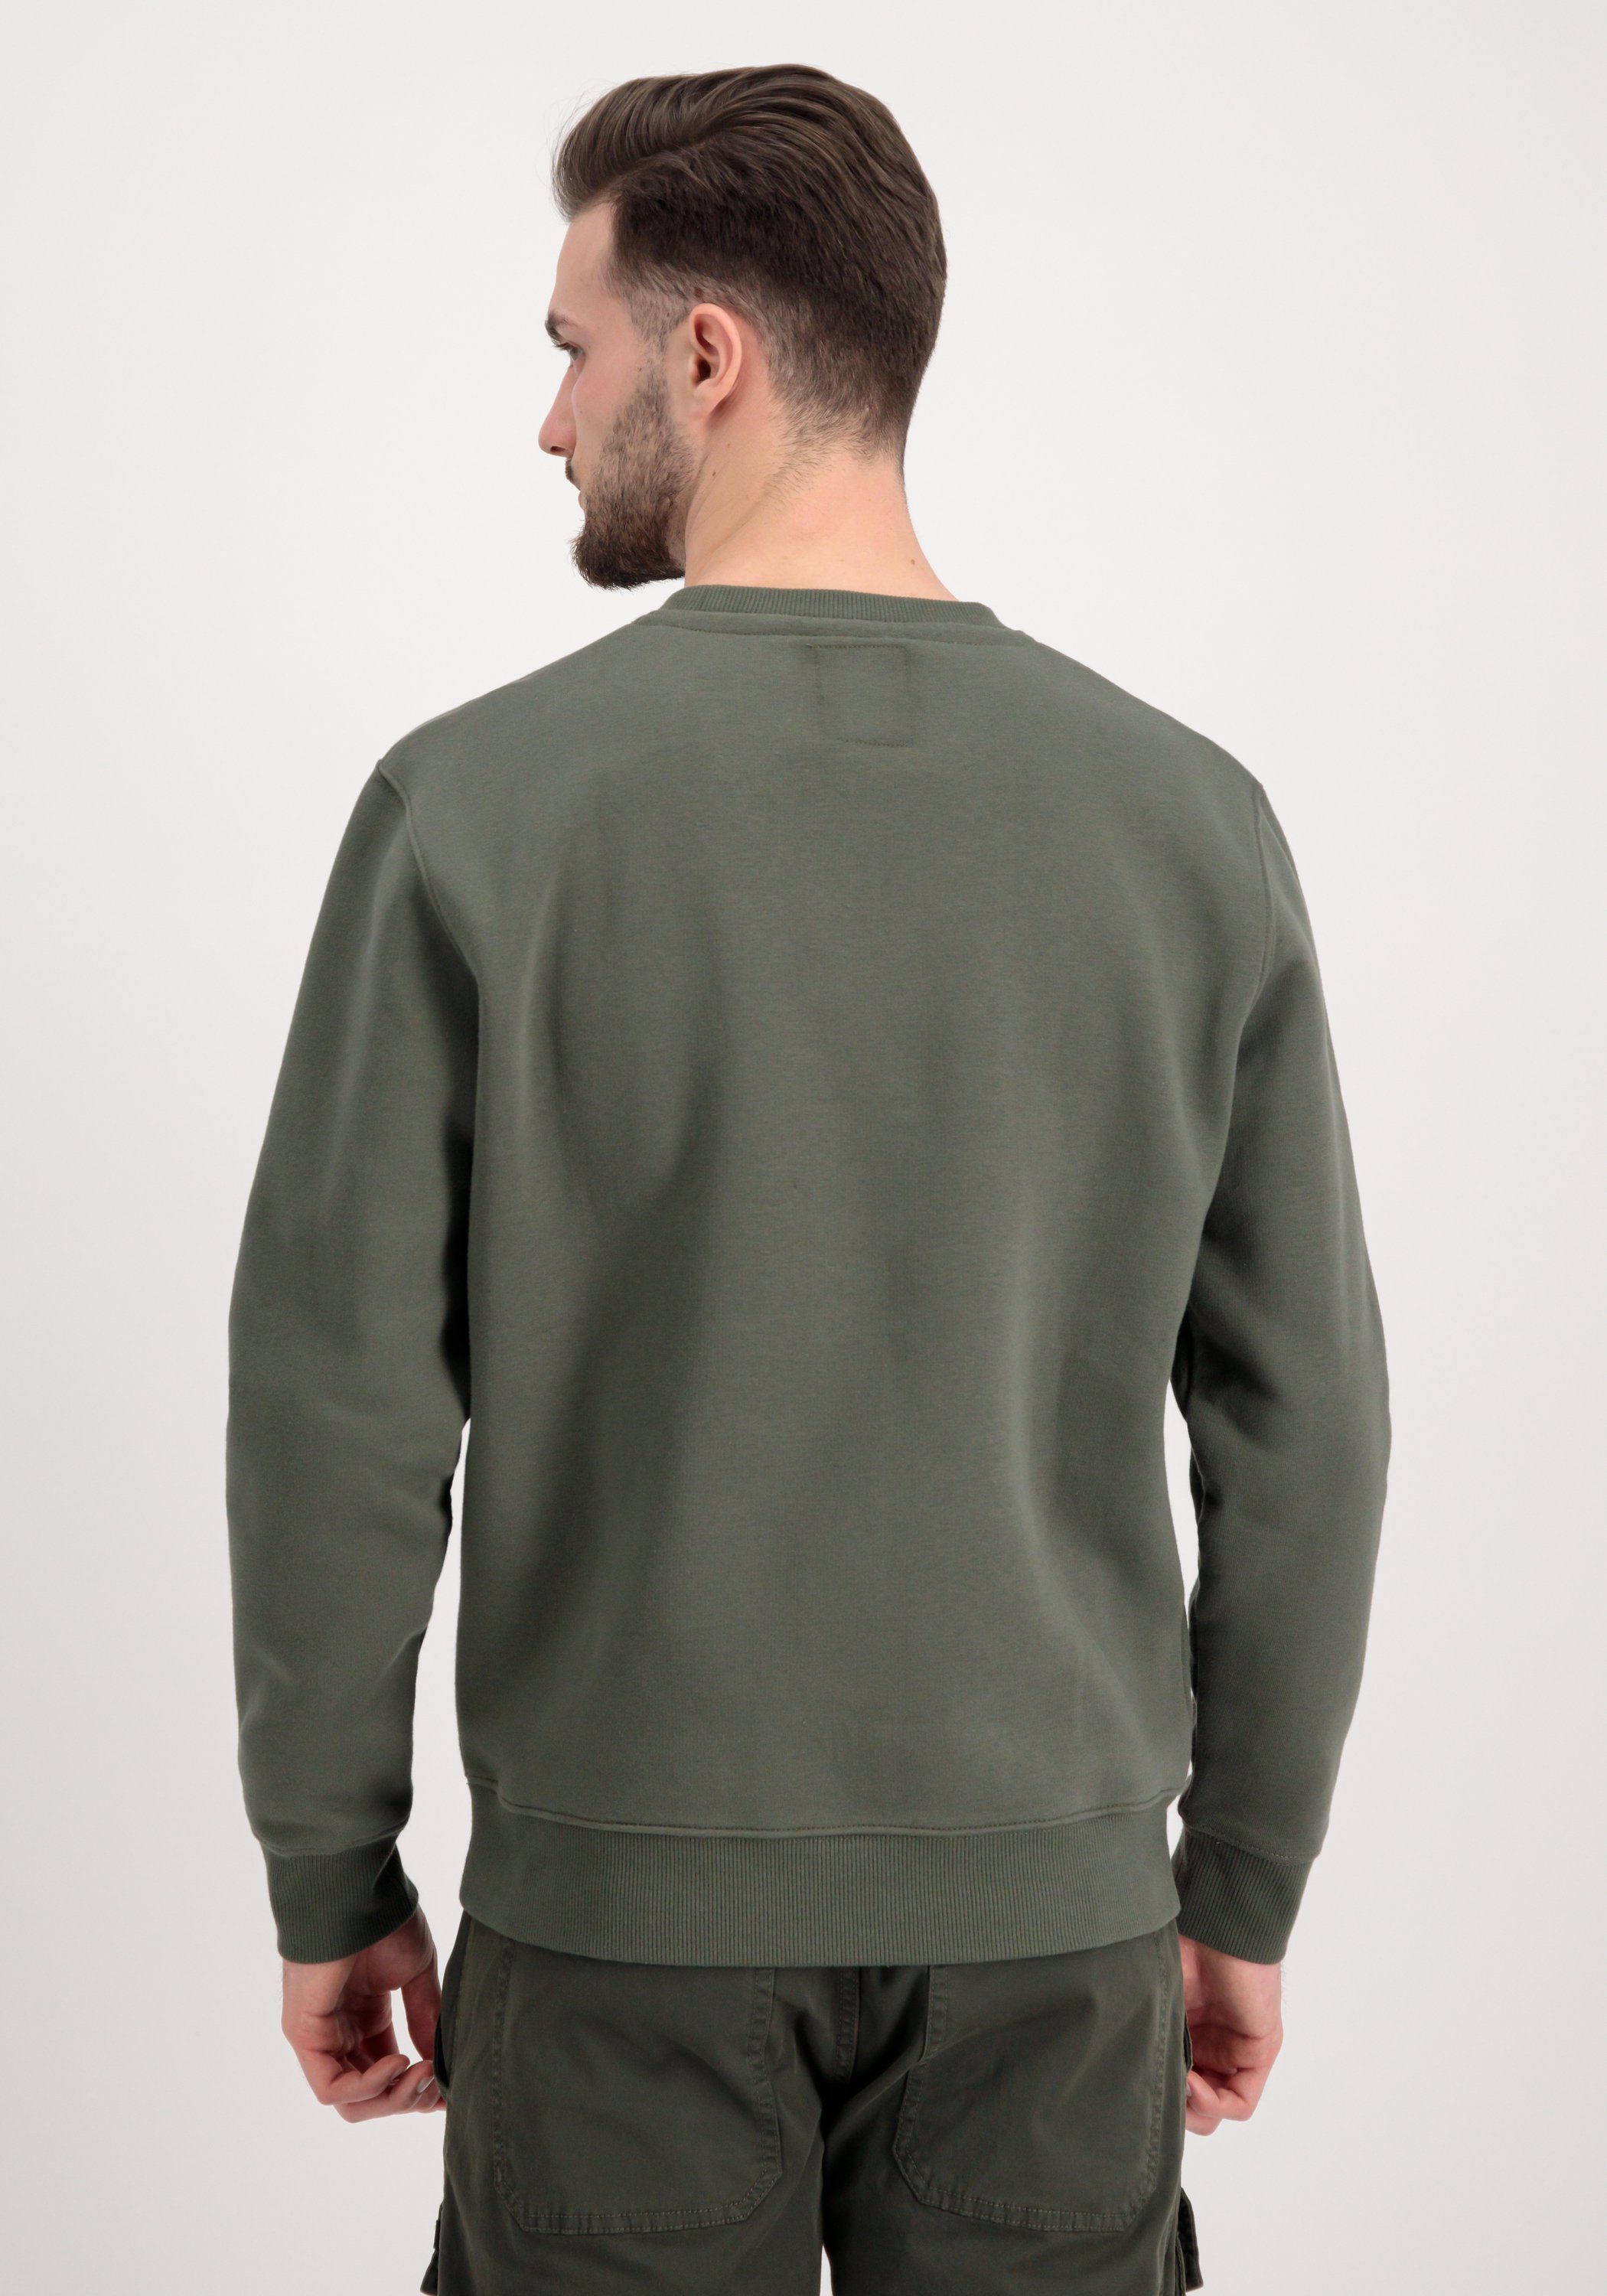 Sweater Alpha dark olive Sweater Industries - Alpha Men Embroidery Sweatshirts Industries Basic